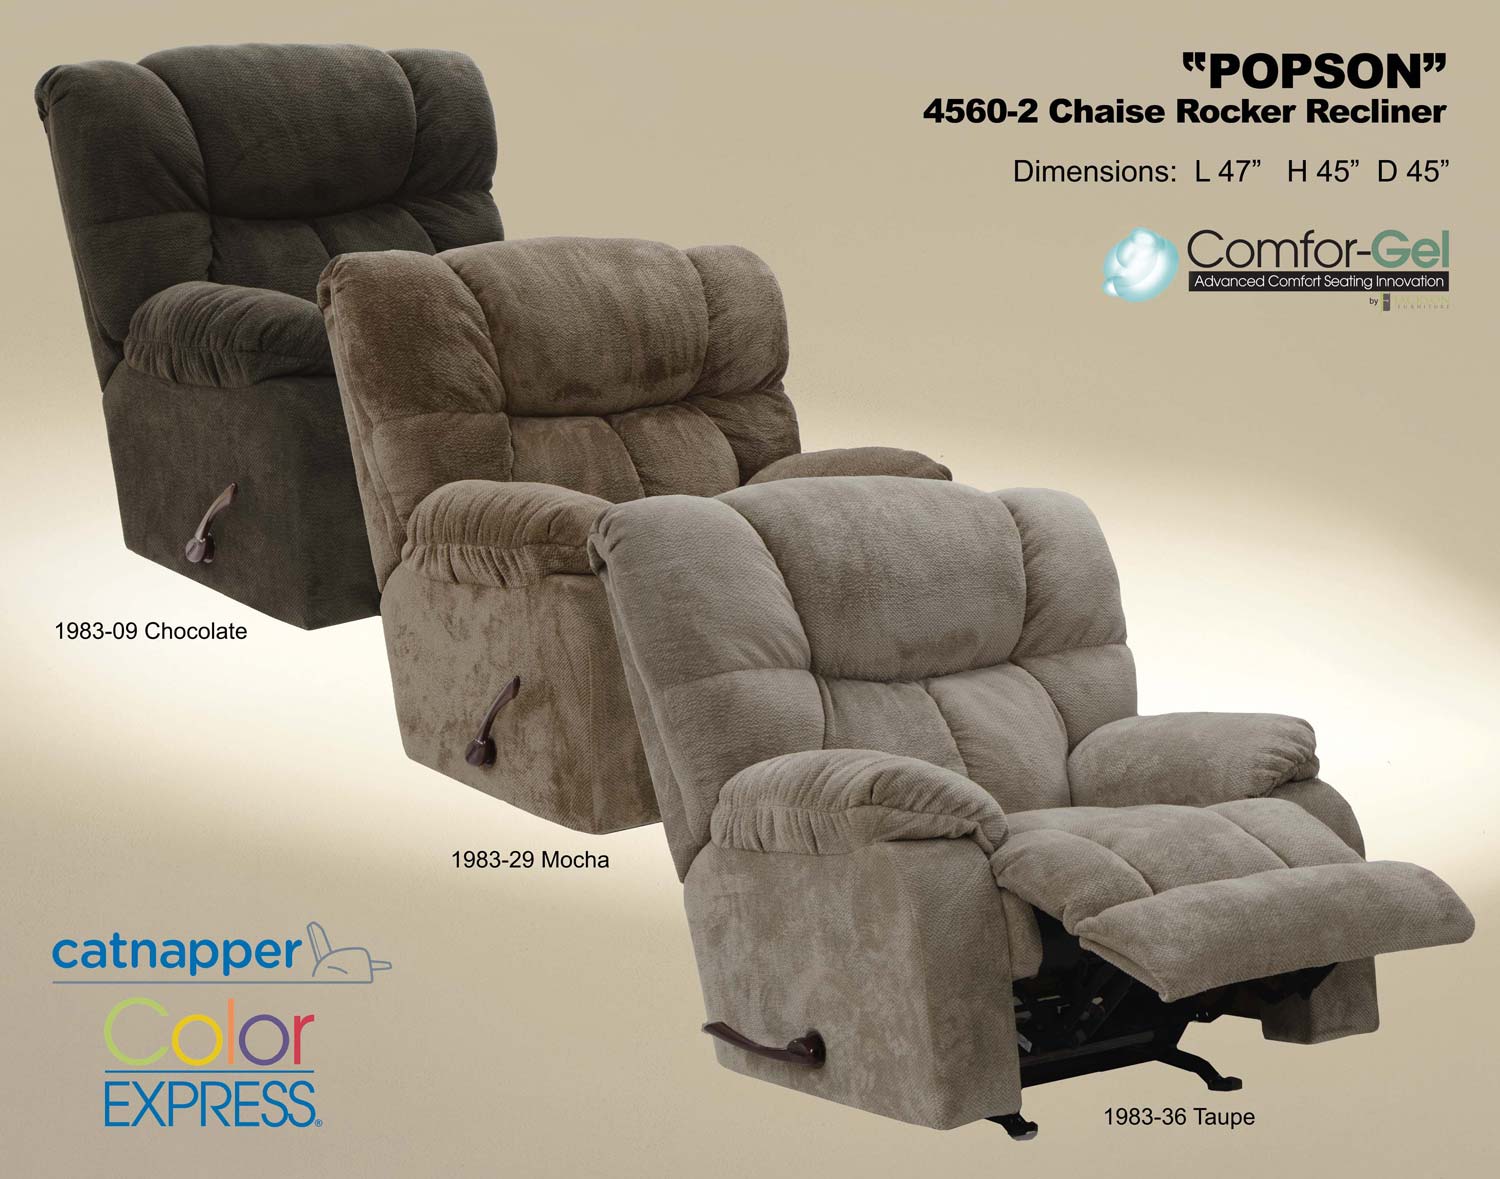 CatNapper Popson X-tra Comfort Chaise Rocker Recliner - Mocha